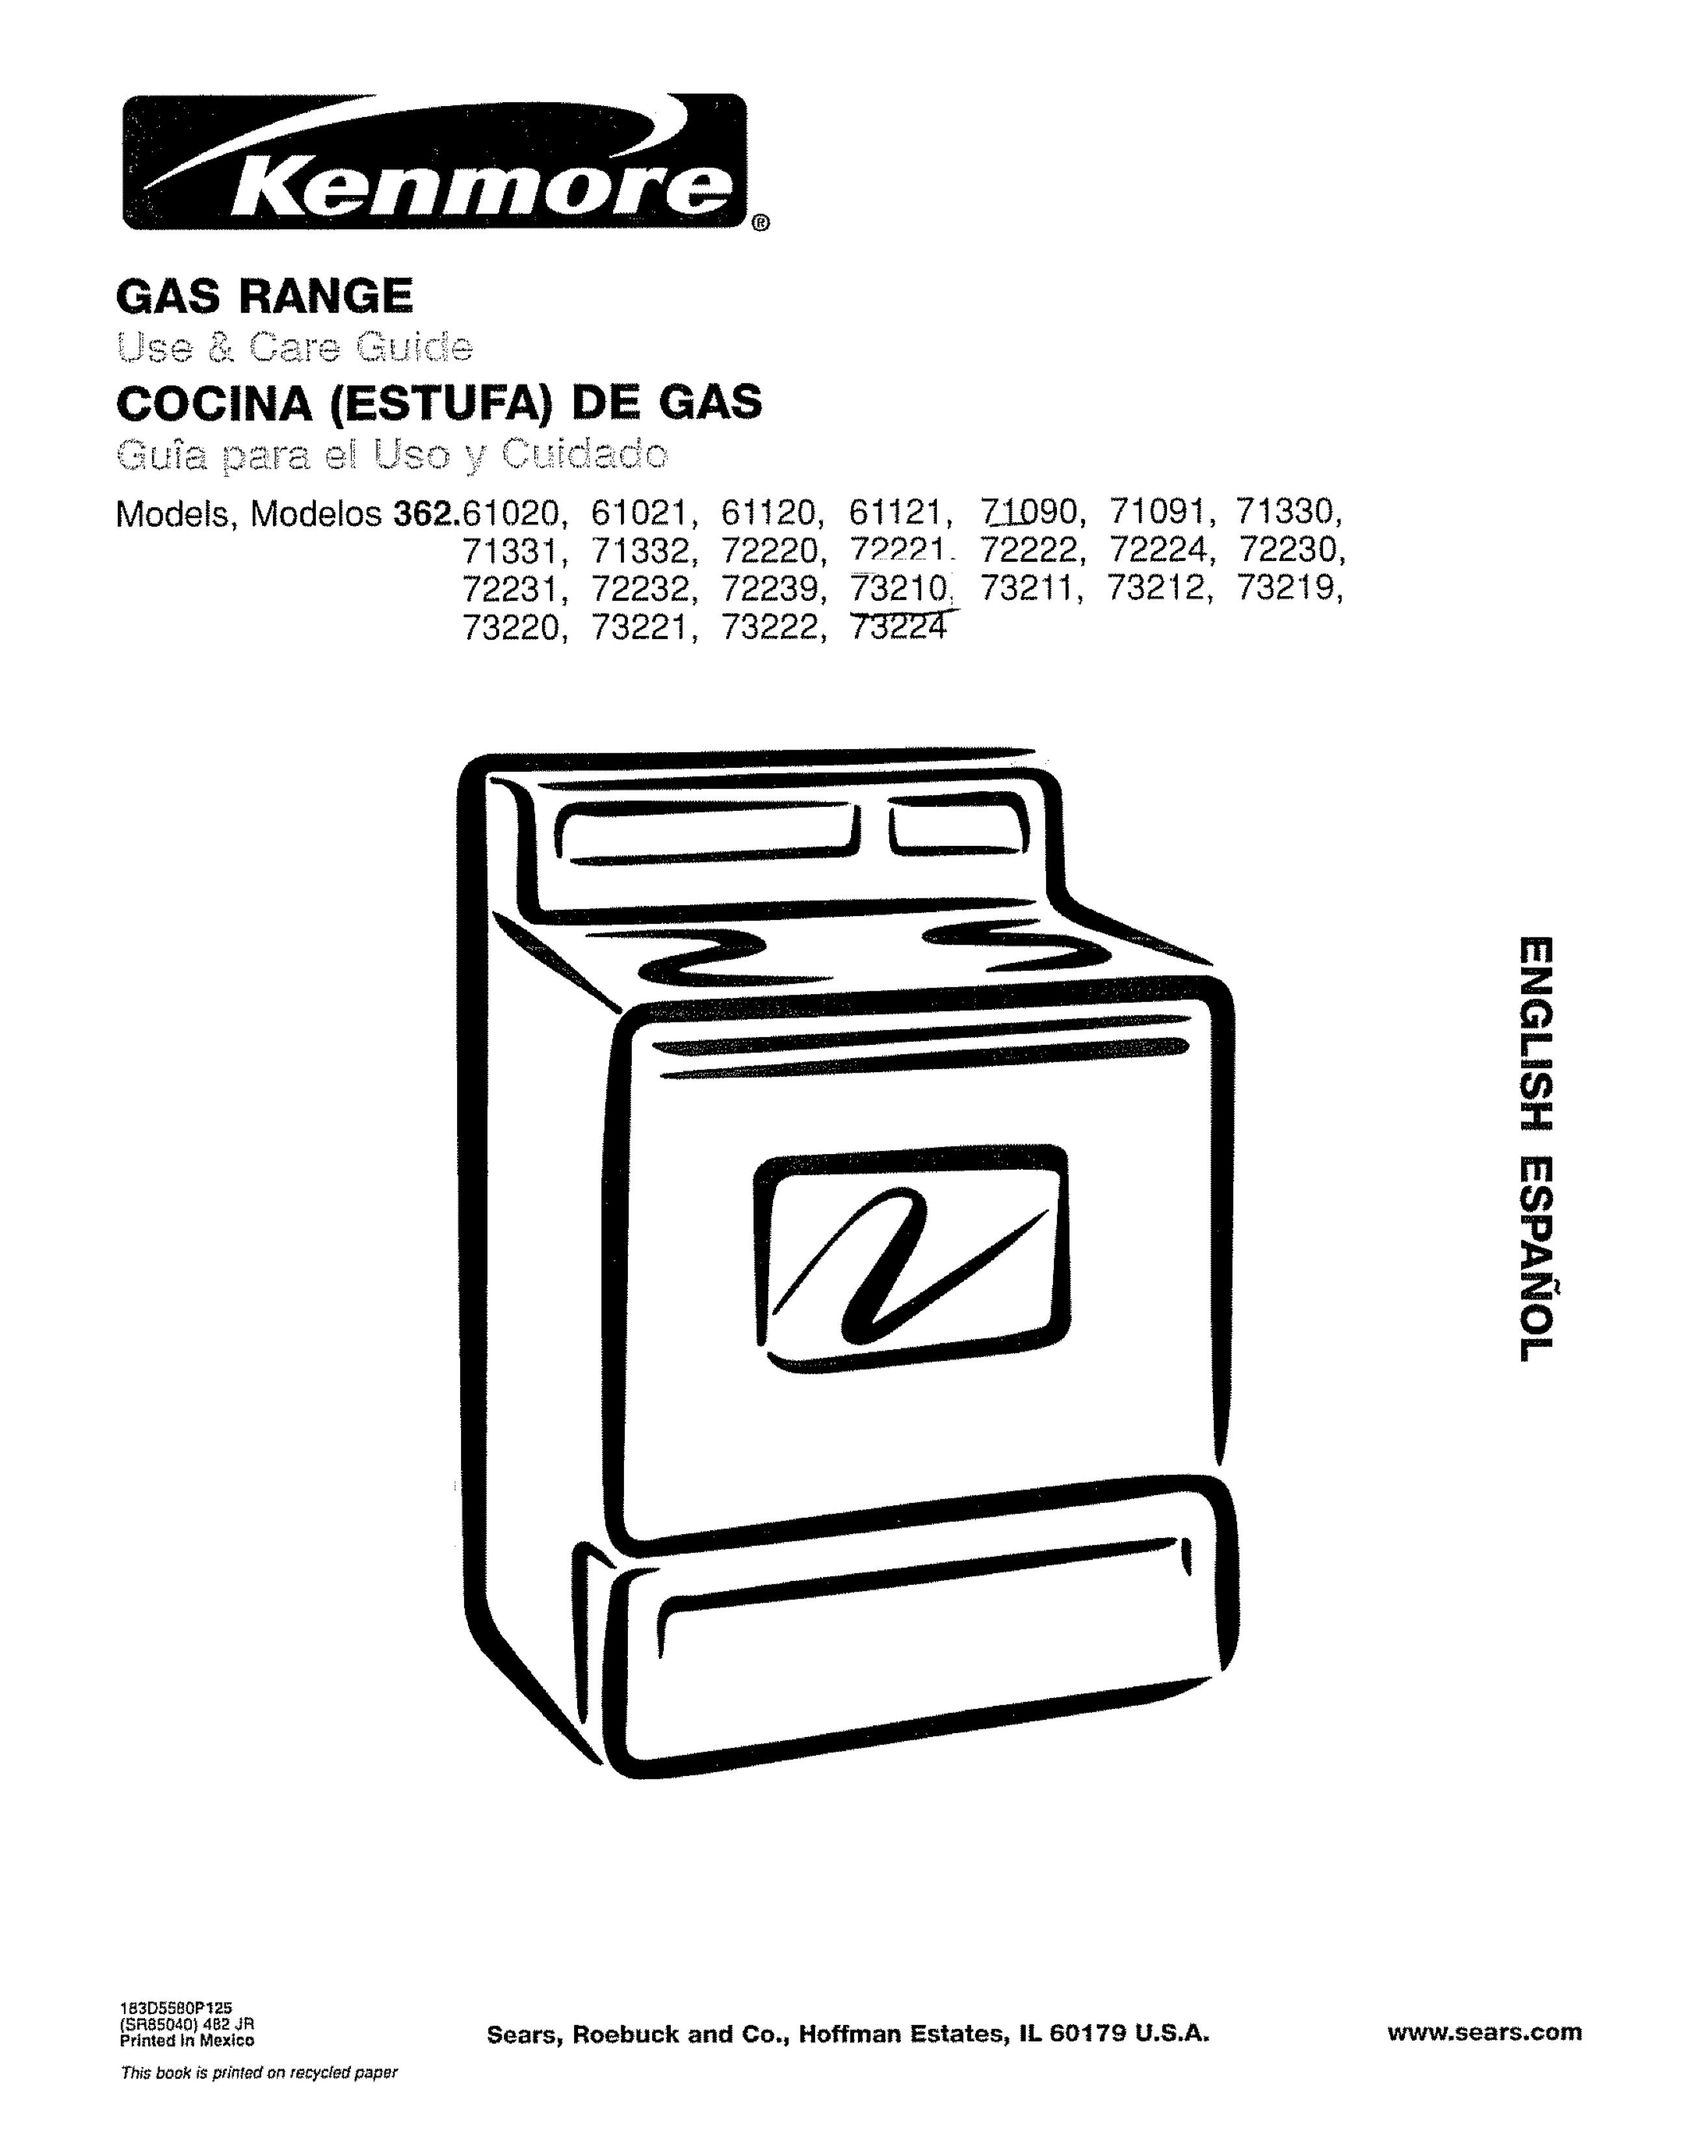 Kenmore 362.61021 Range User Manual